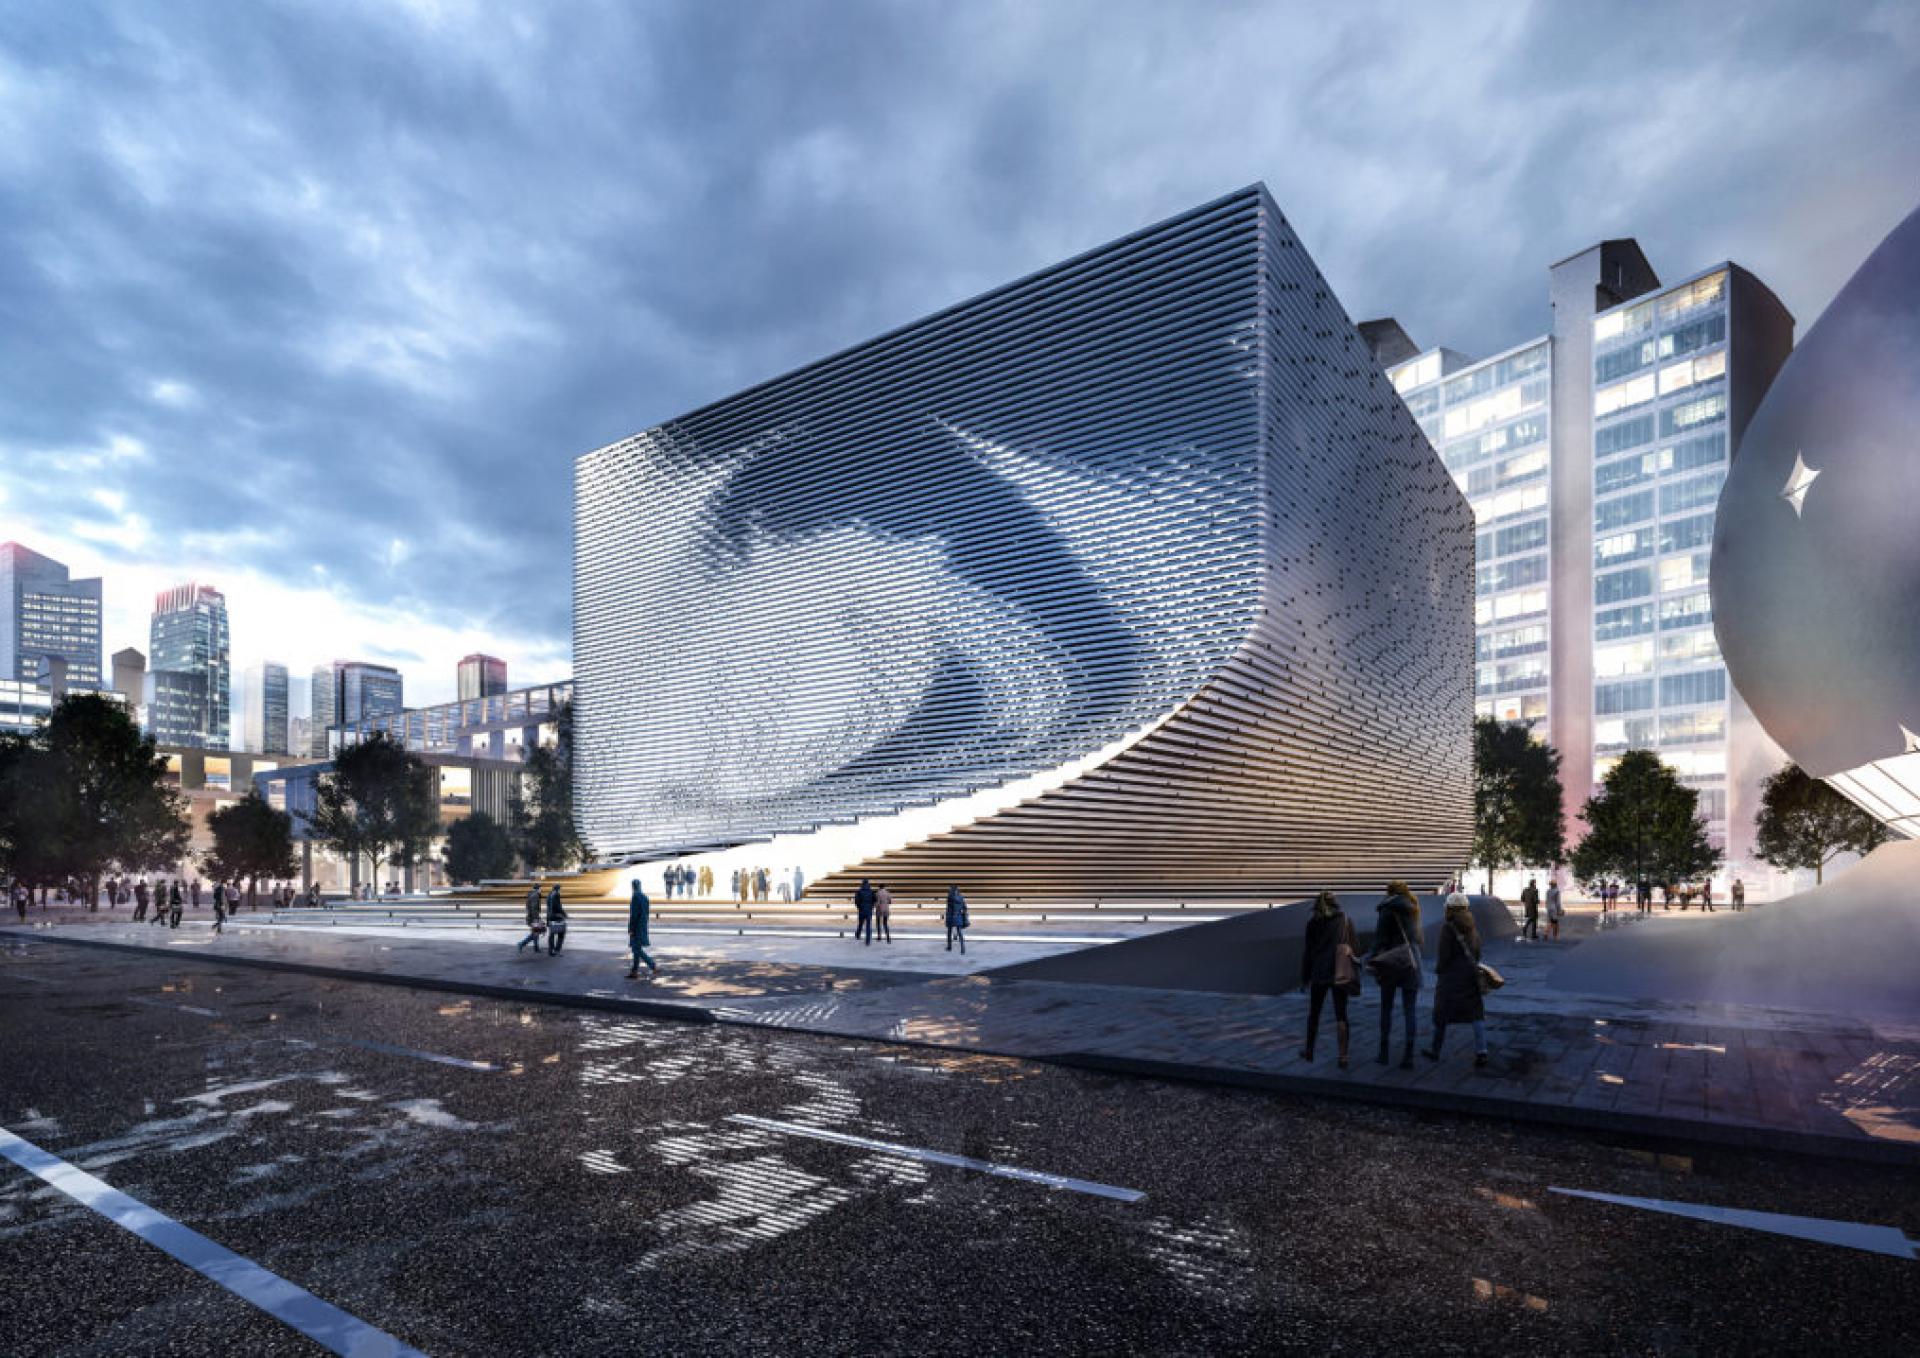 Jadric Architektur and their Korean Partner “1990uao” (Yoon Geun Ju) are chosen to realize the Seoul Photographic Art Museum after winning an international Design Competition. | Photo via Jadric Architektur